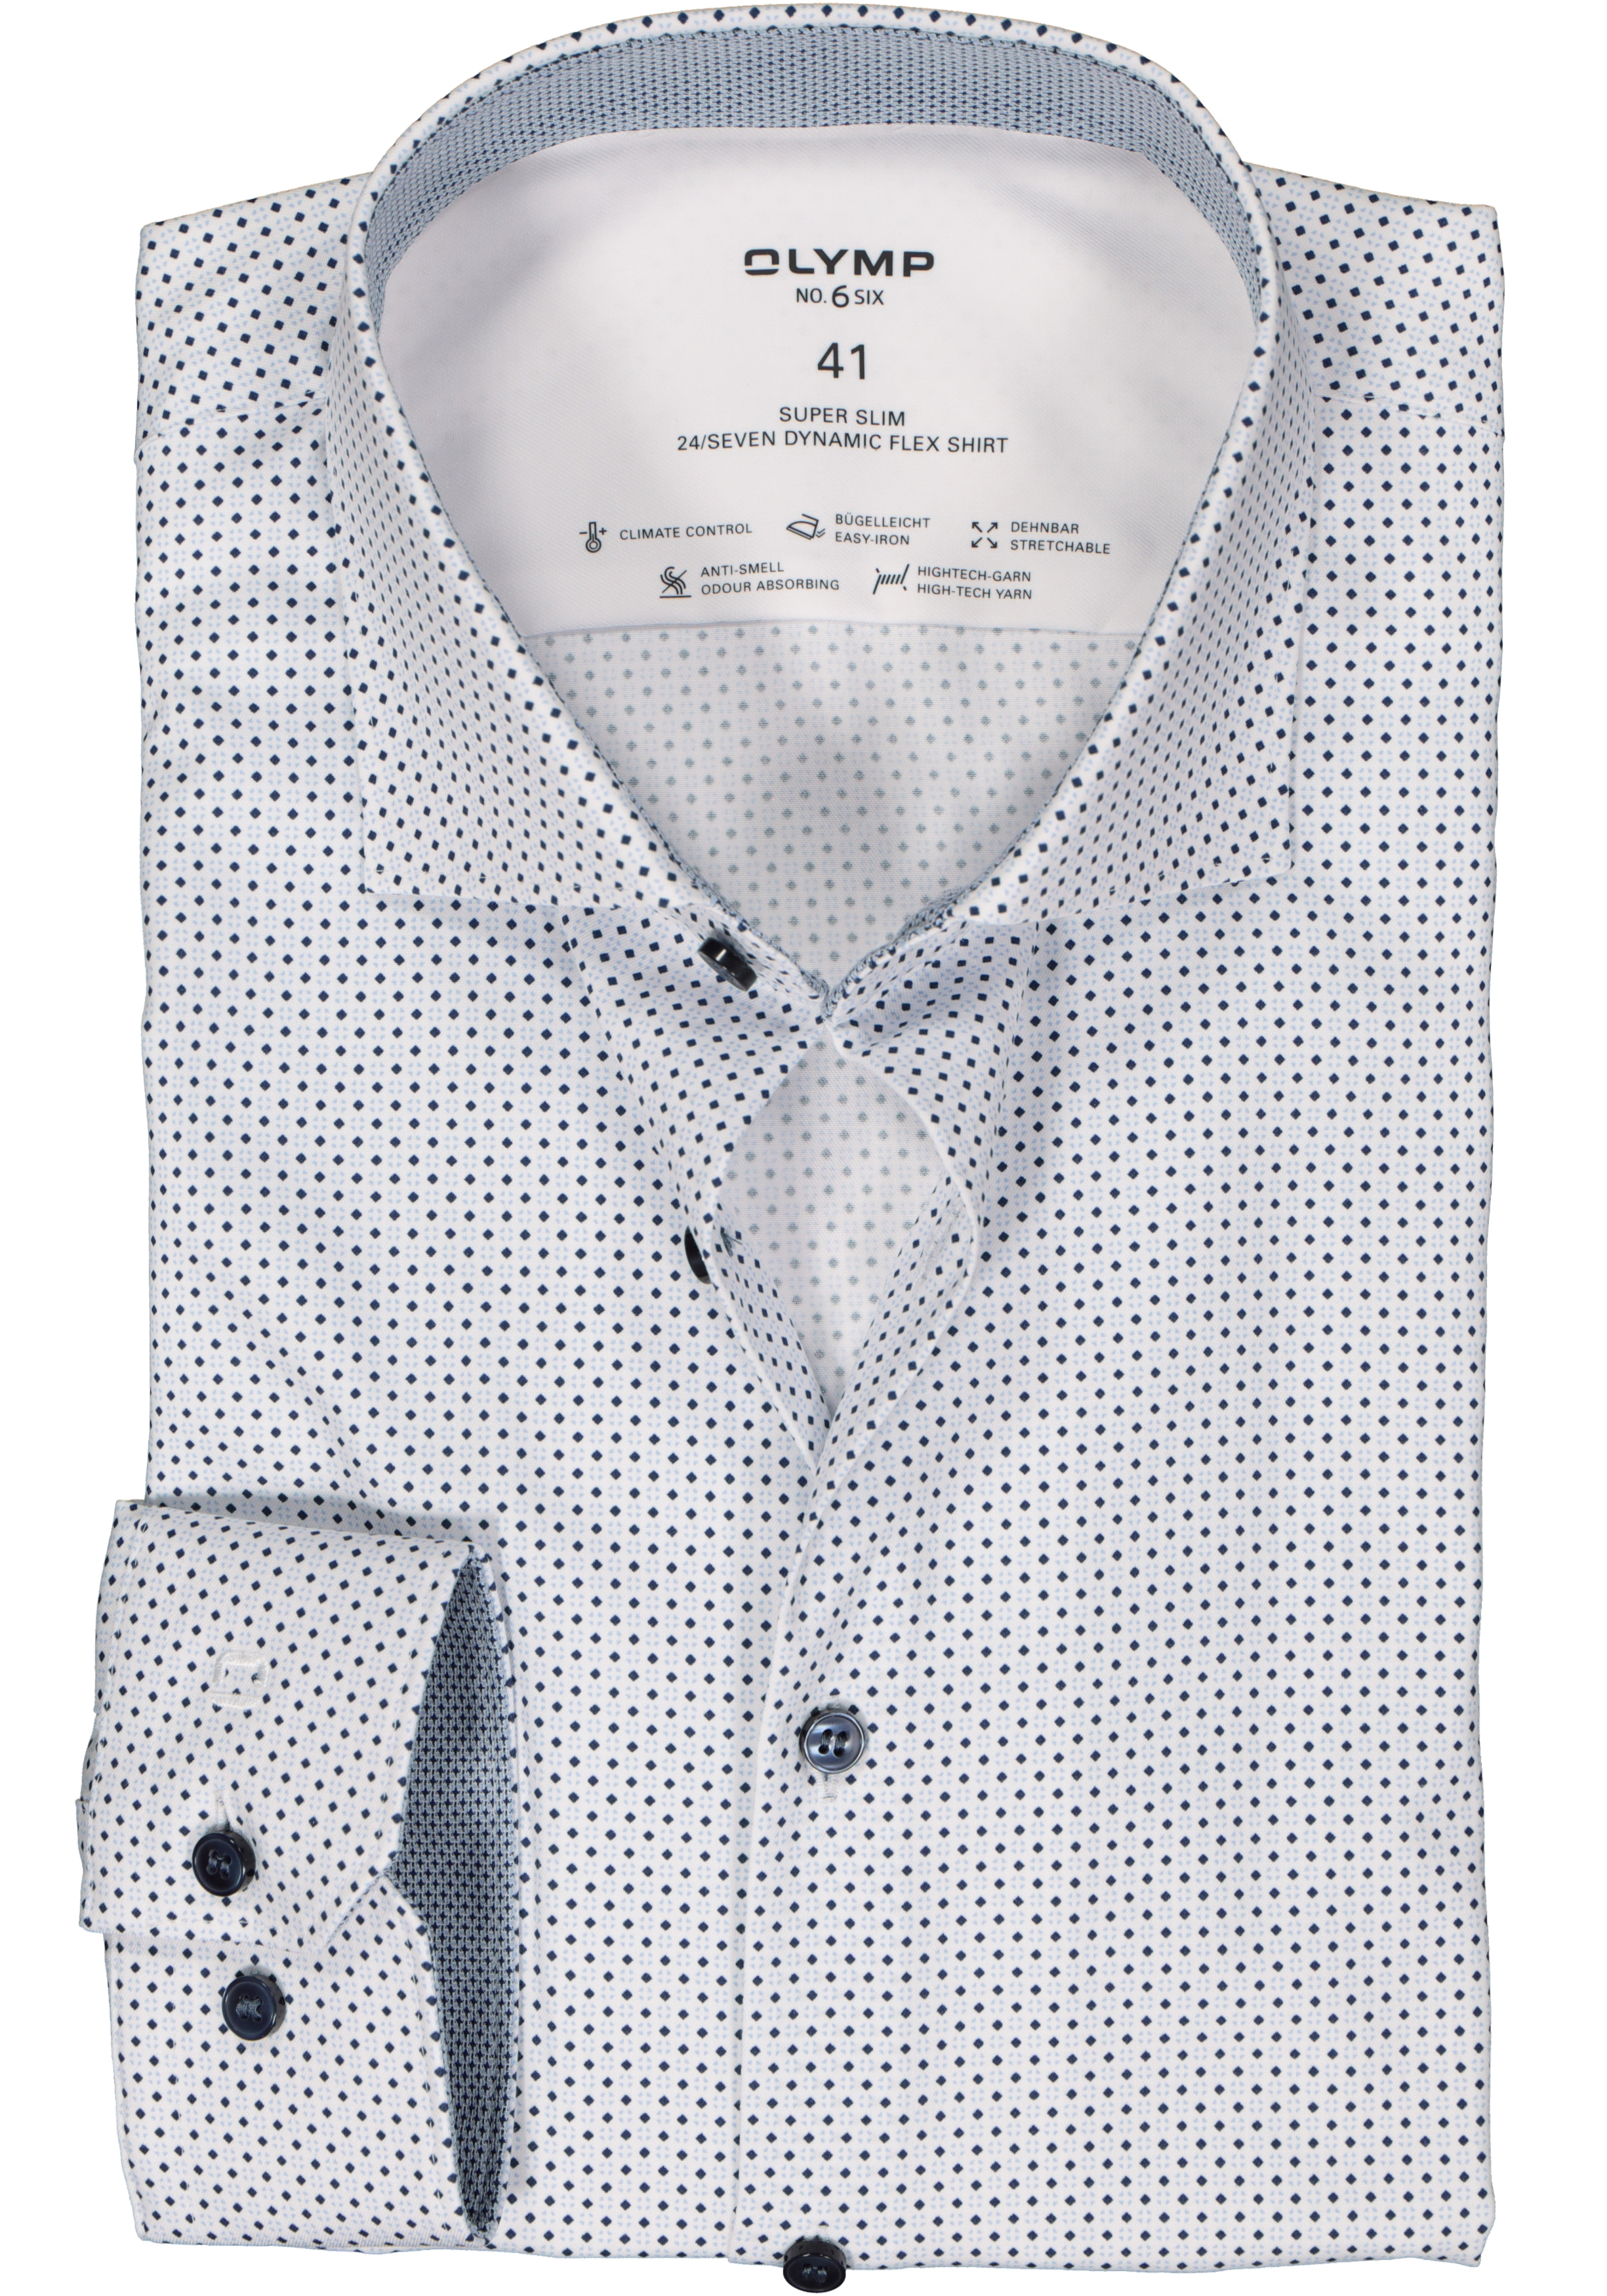 OLYMP 24/7 No. 6 Six super slim fit overhemd, tricot, wit met blauw dessin